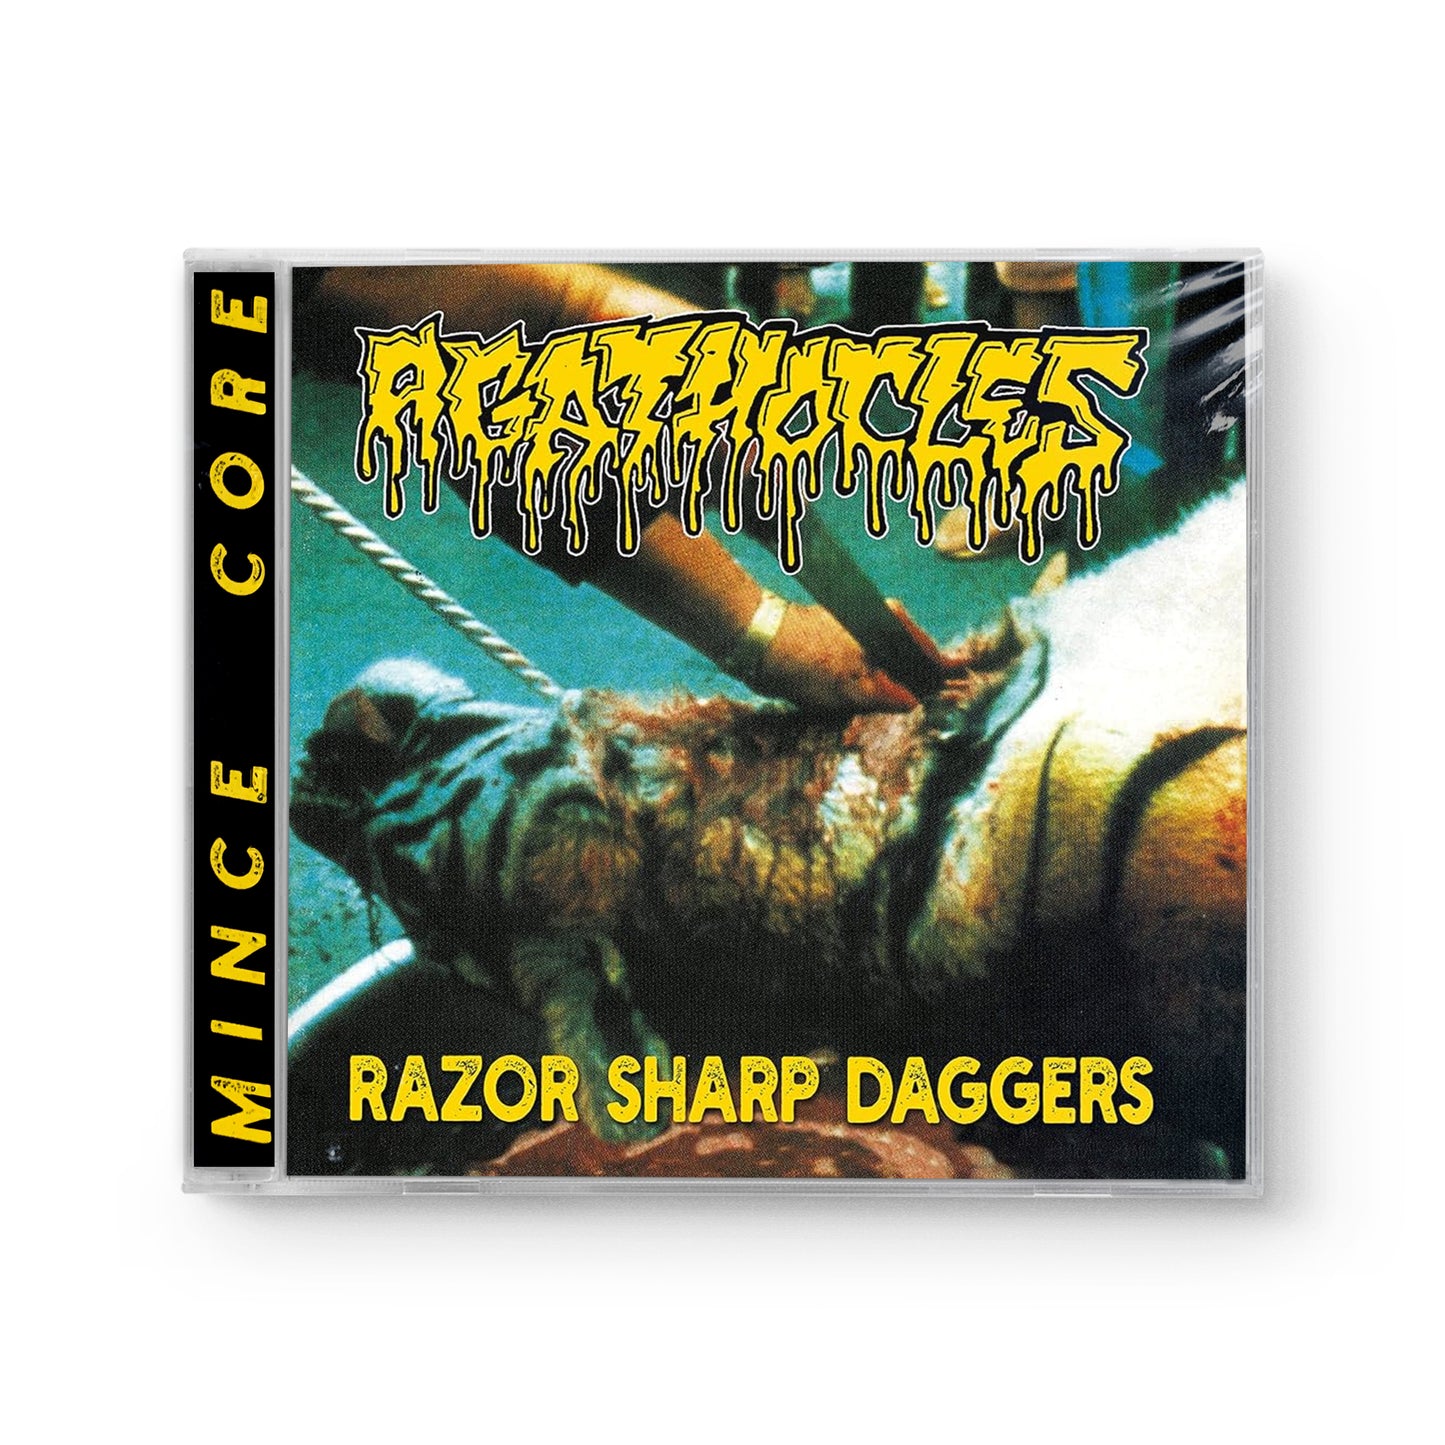 Agathocles "Razor Sharp Daggers" CD